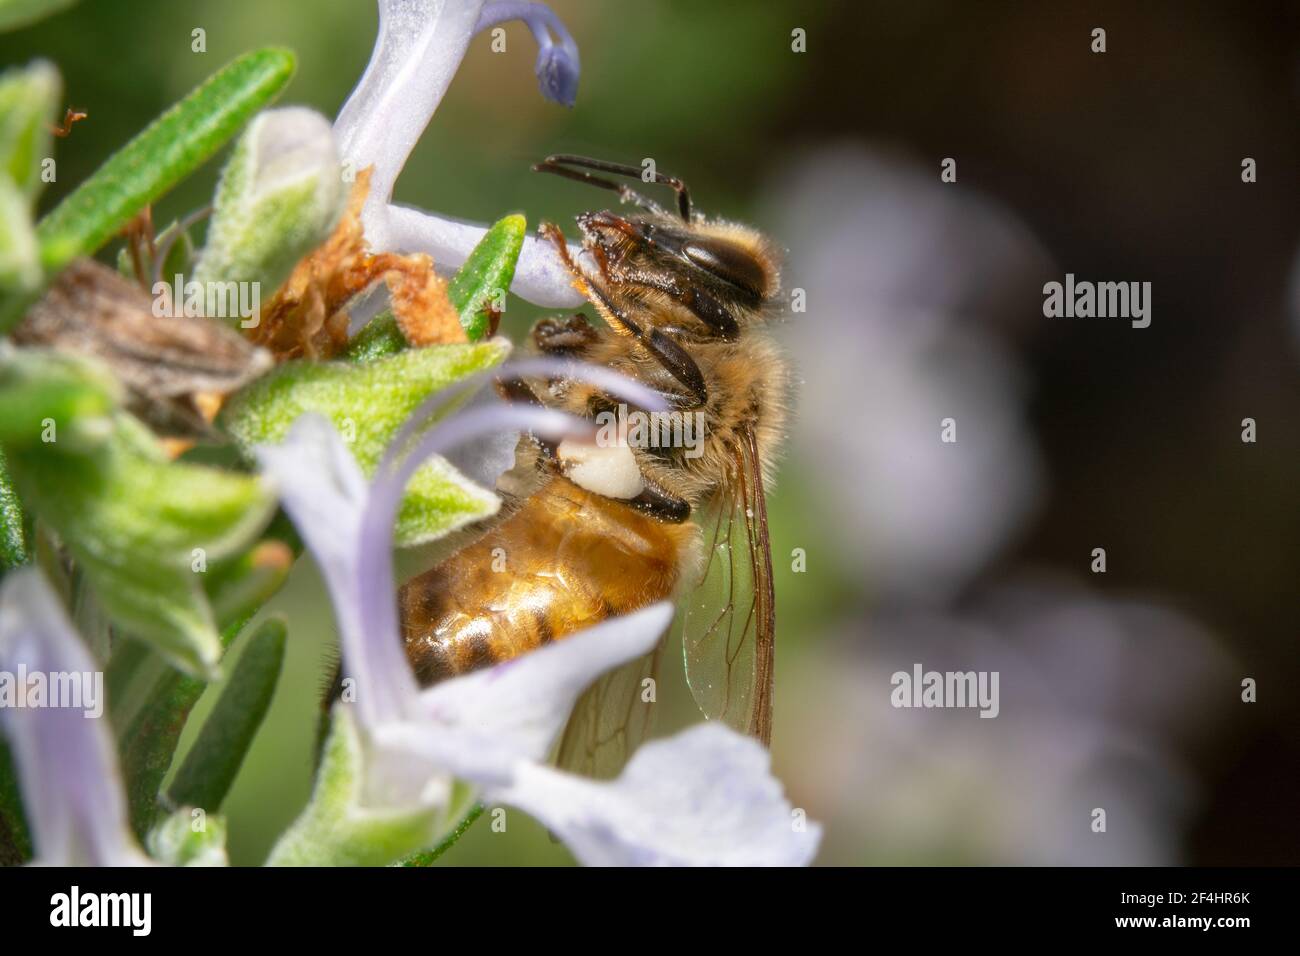 Abeja de miel atrapada dentro de pequeñas flores blancas en busca de néctar Foto de stock